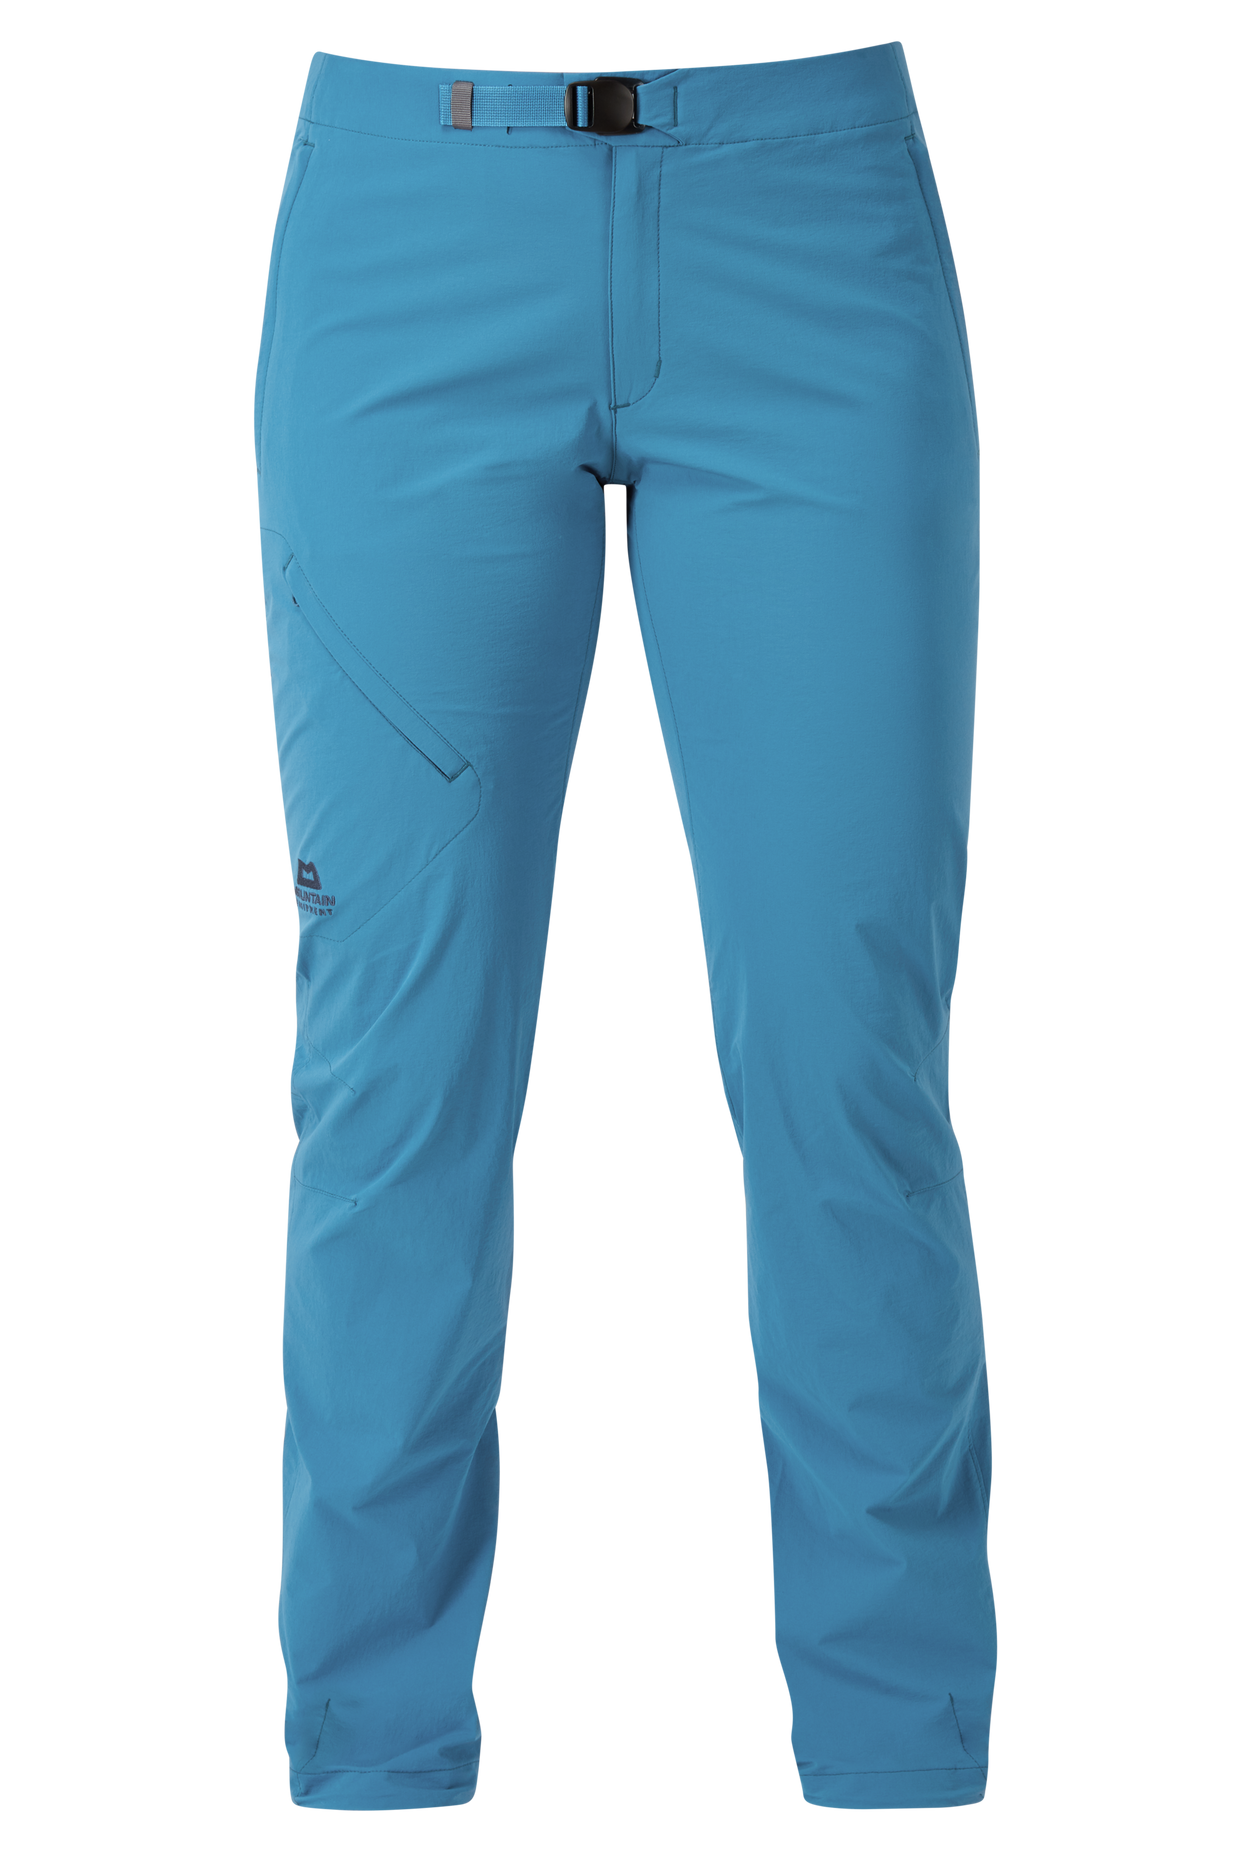 Mountain Equipment dámské softshellové kalhoty Comici Wmns Pant Barva: Alto Blue, Velikost: 8/XS